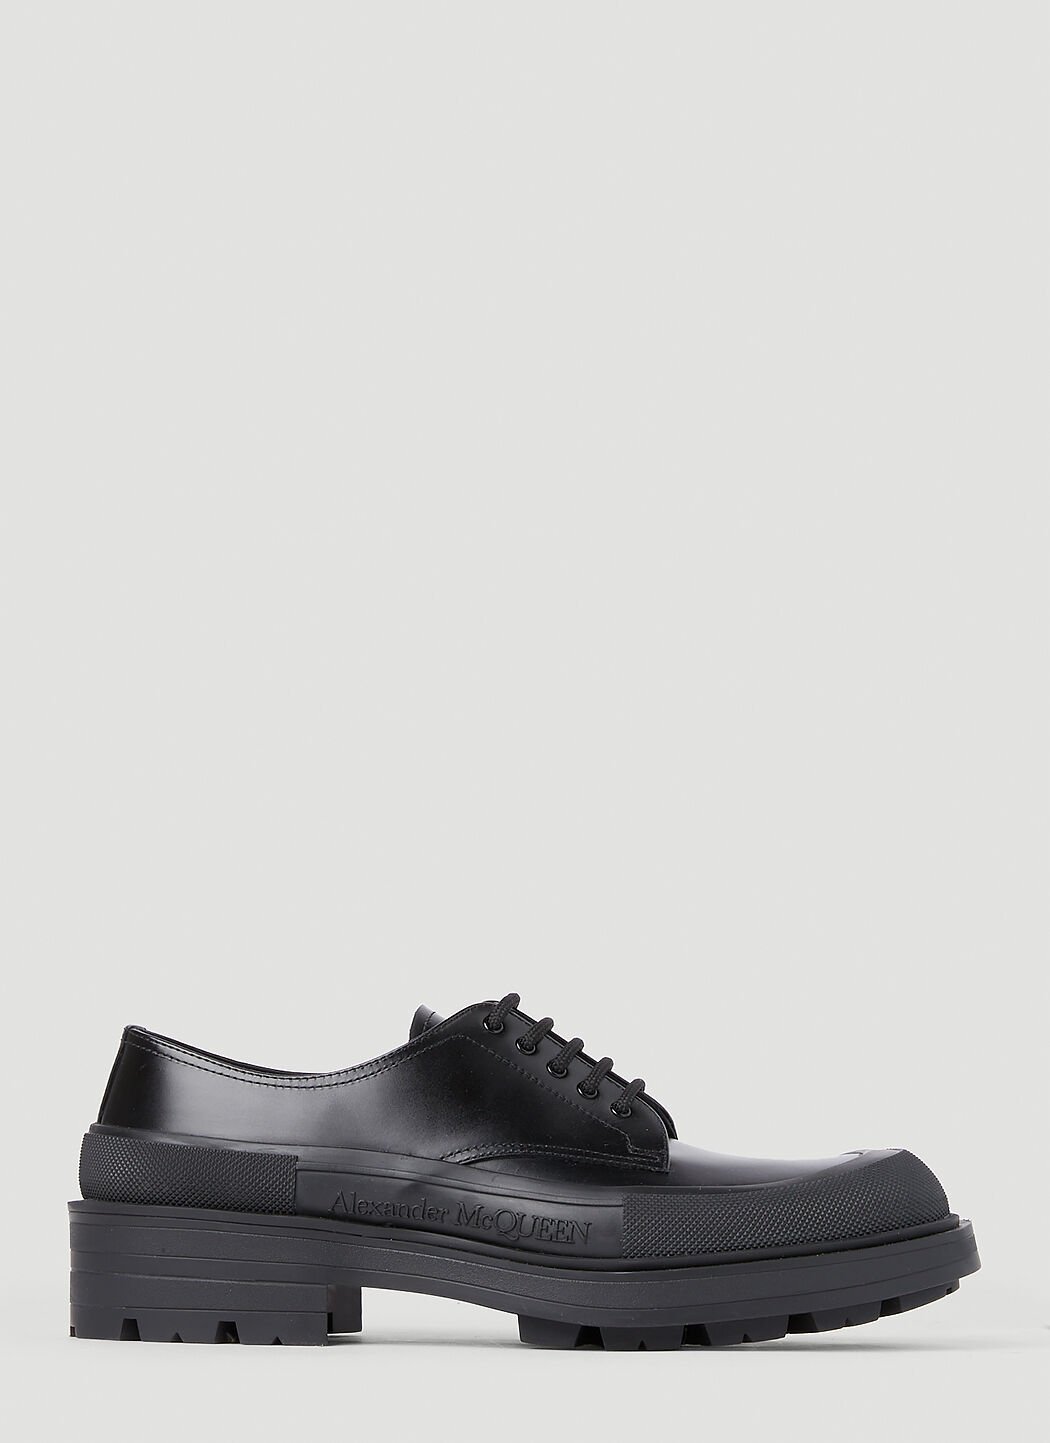 Alexander McQueen Tread Loafers Black amq0152016